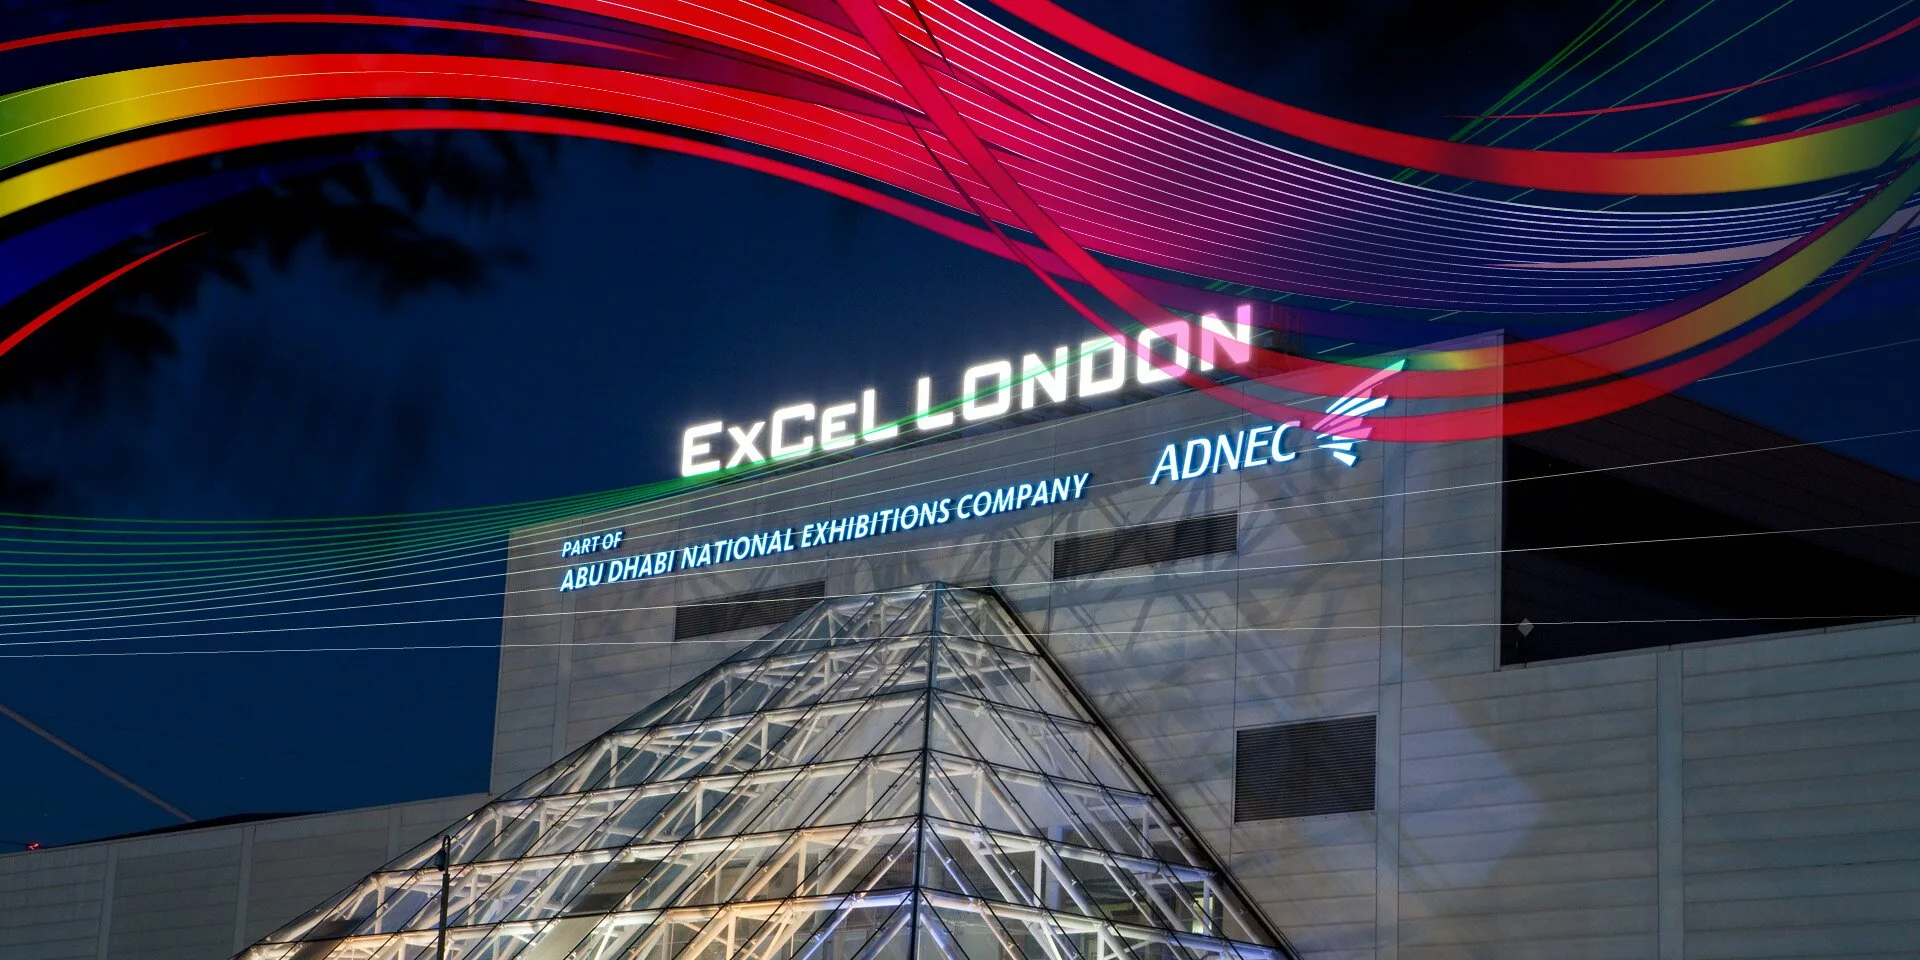 Excel London